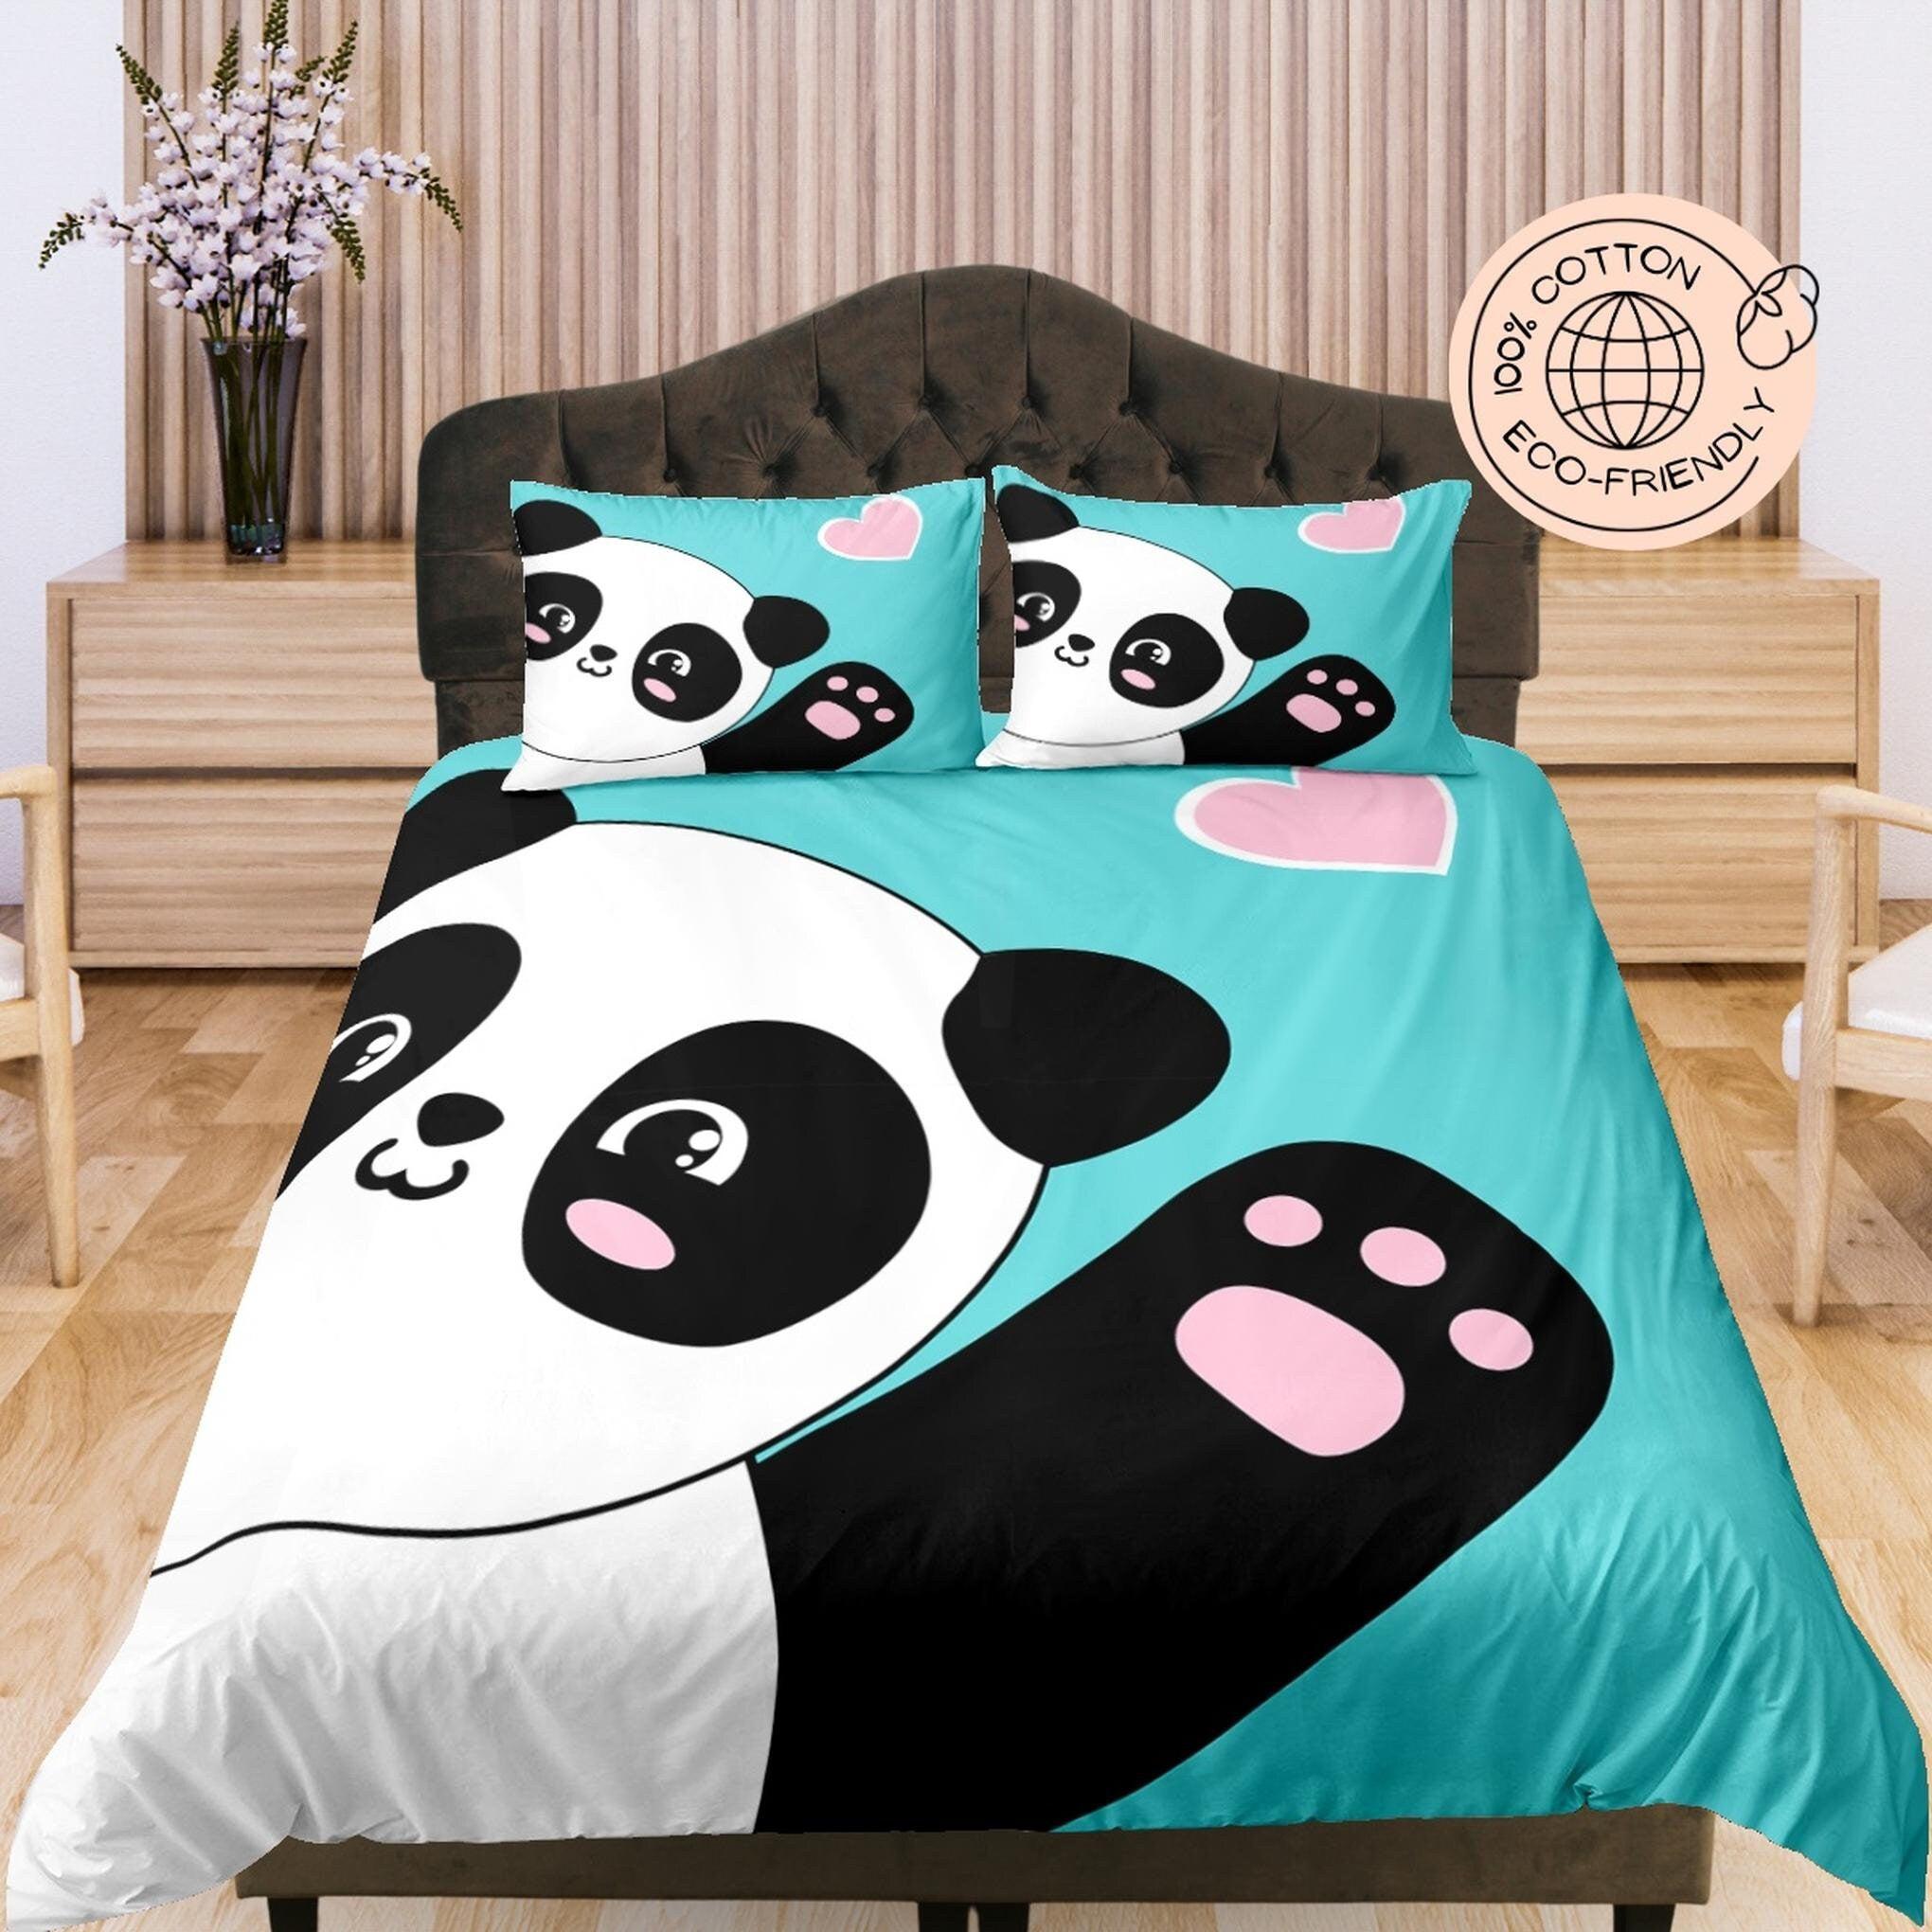 daintyduvet Waving Cute Panda, Cyan Cotton Duvet Cover Set for Kids, Toddler Bedding, Baby Zipper Bedding, Nursery Cotton Bedding, Crib Blanket